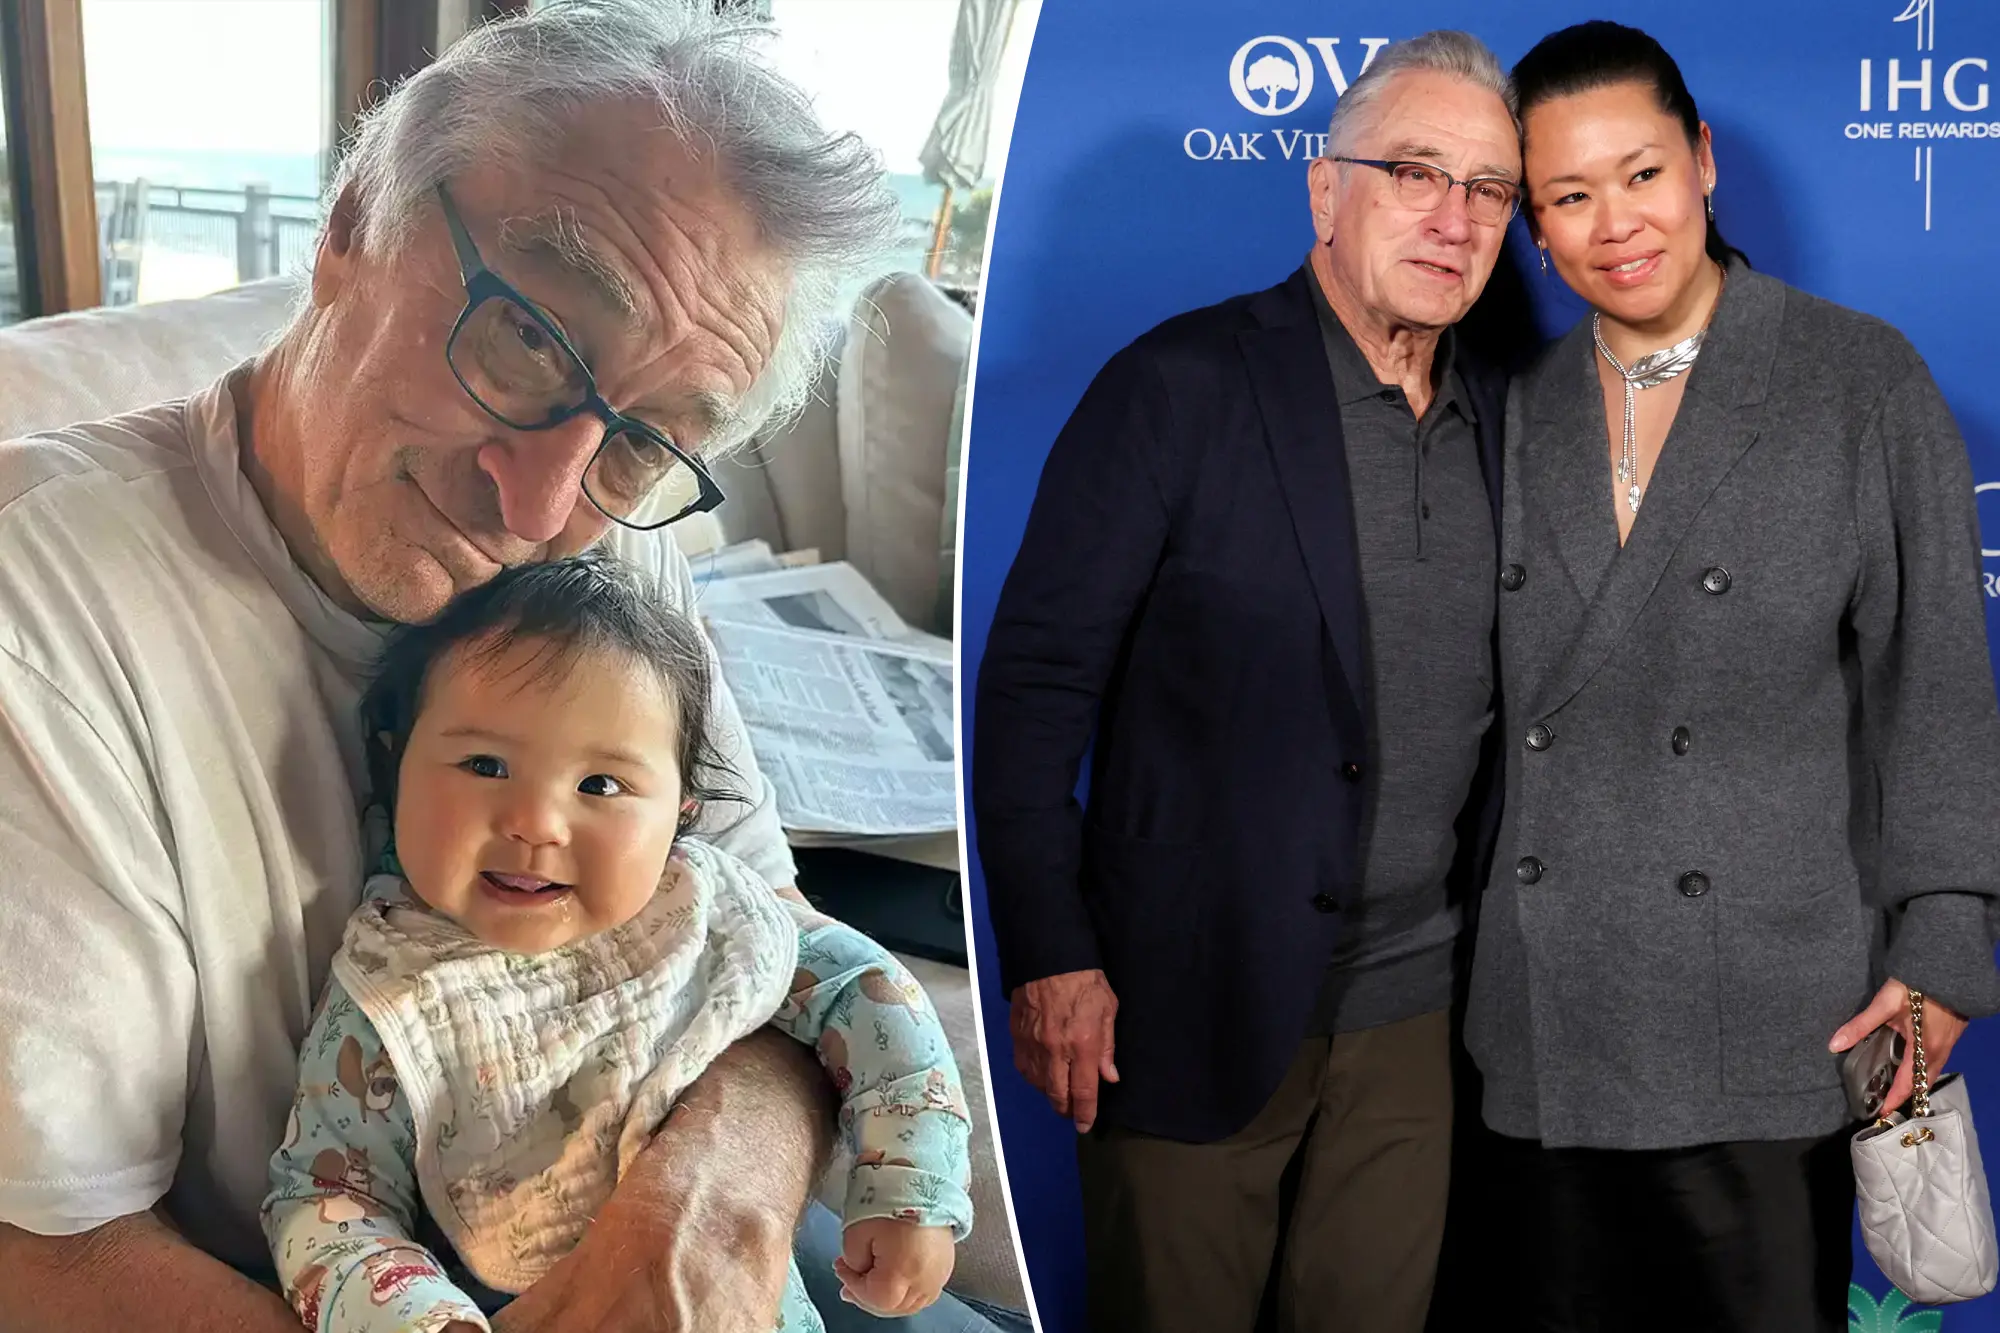 Robert De Niro and Baby Daughter Gia Share Rare Snuggle in Family Photo